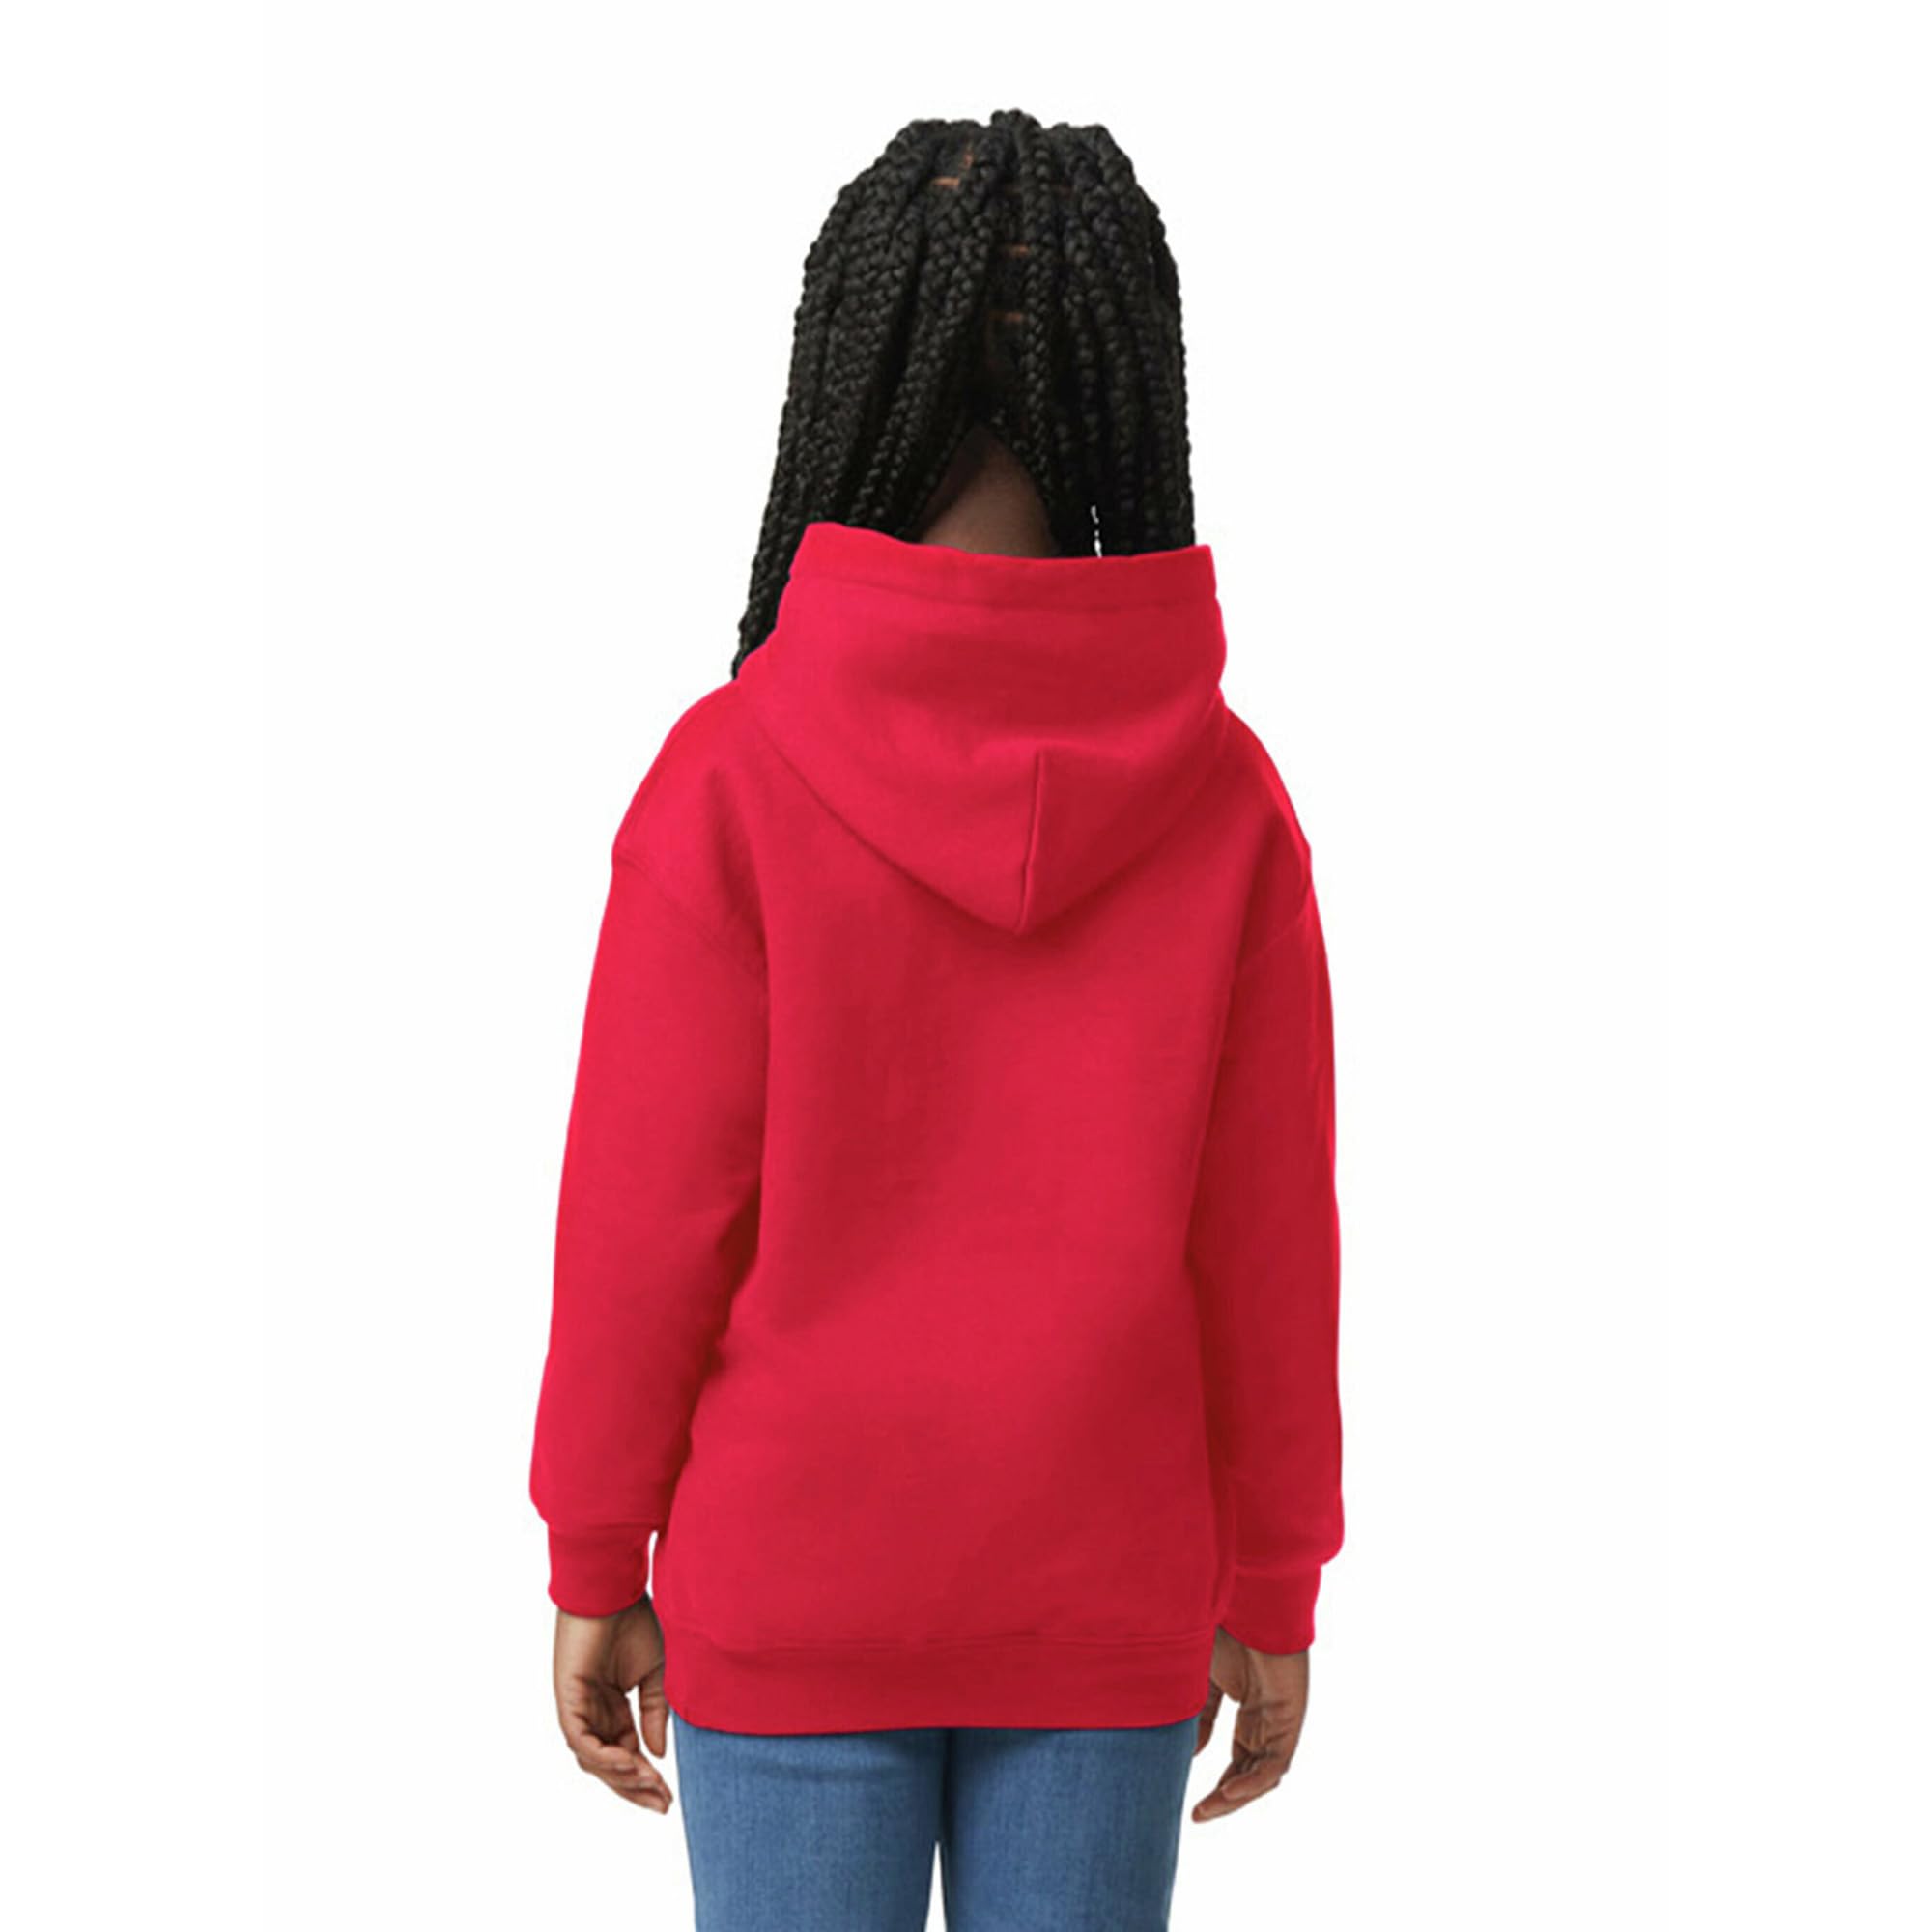 Gildan Youth Hoodie Sweatshirt, Style G18500B